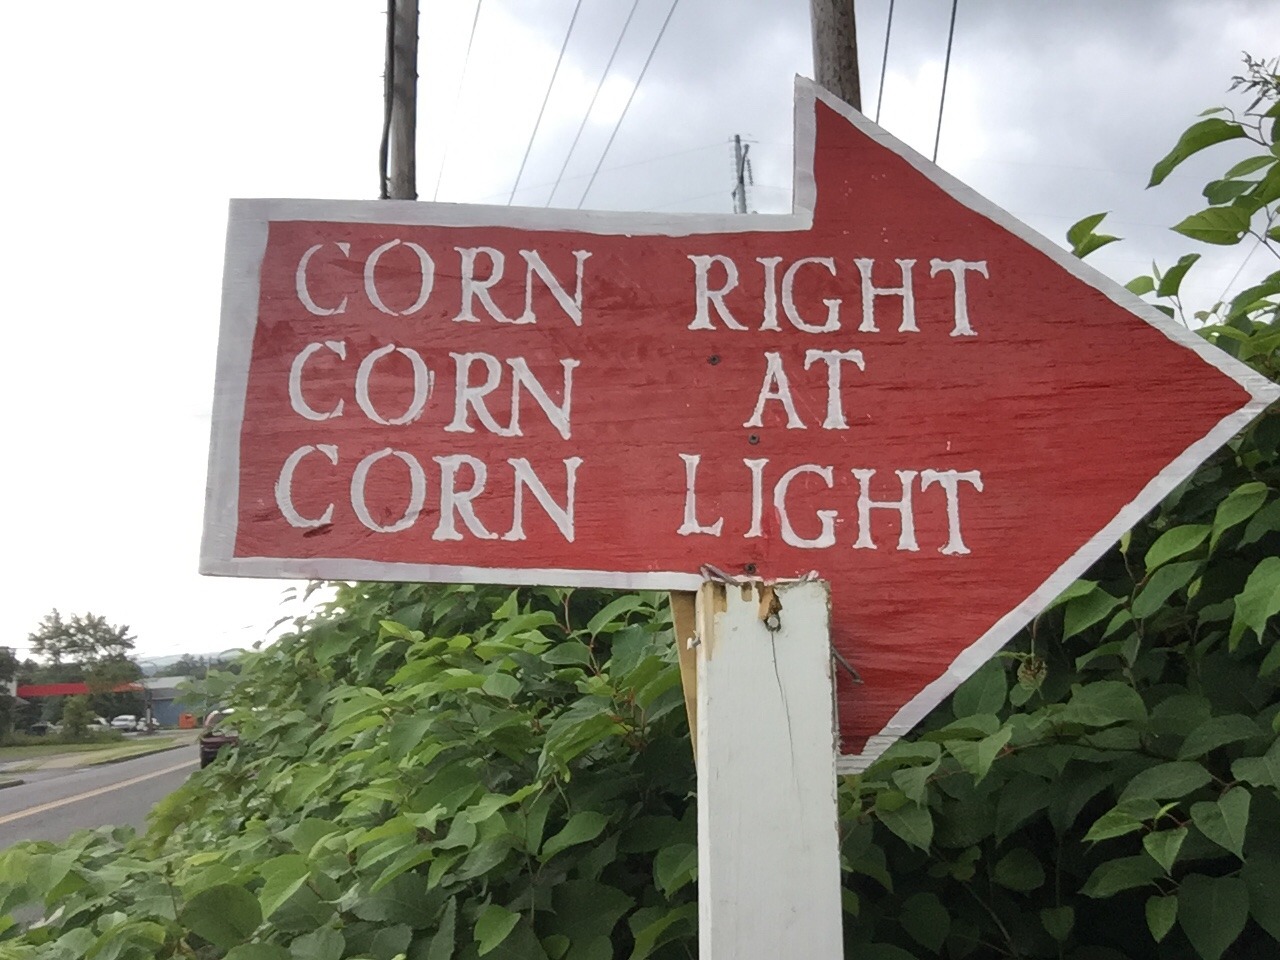 alatar-and-pallando: liathepenguinologist: corn right corn at corn light first corn